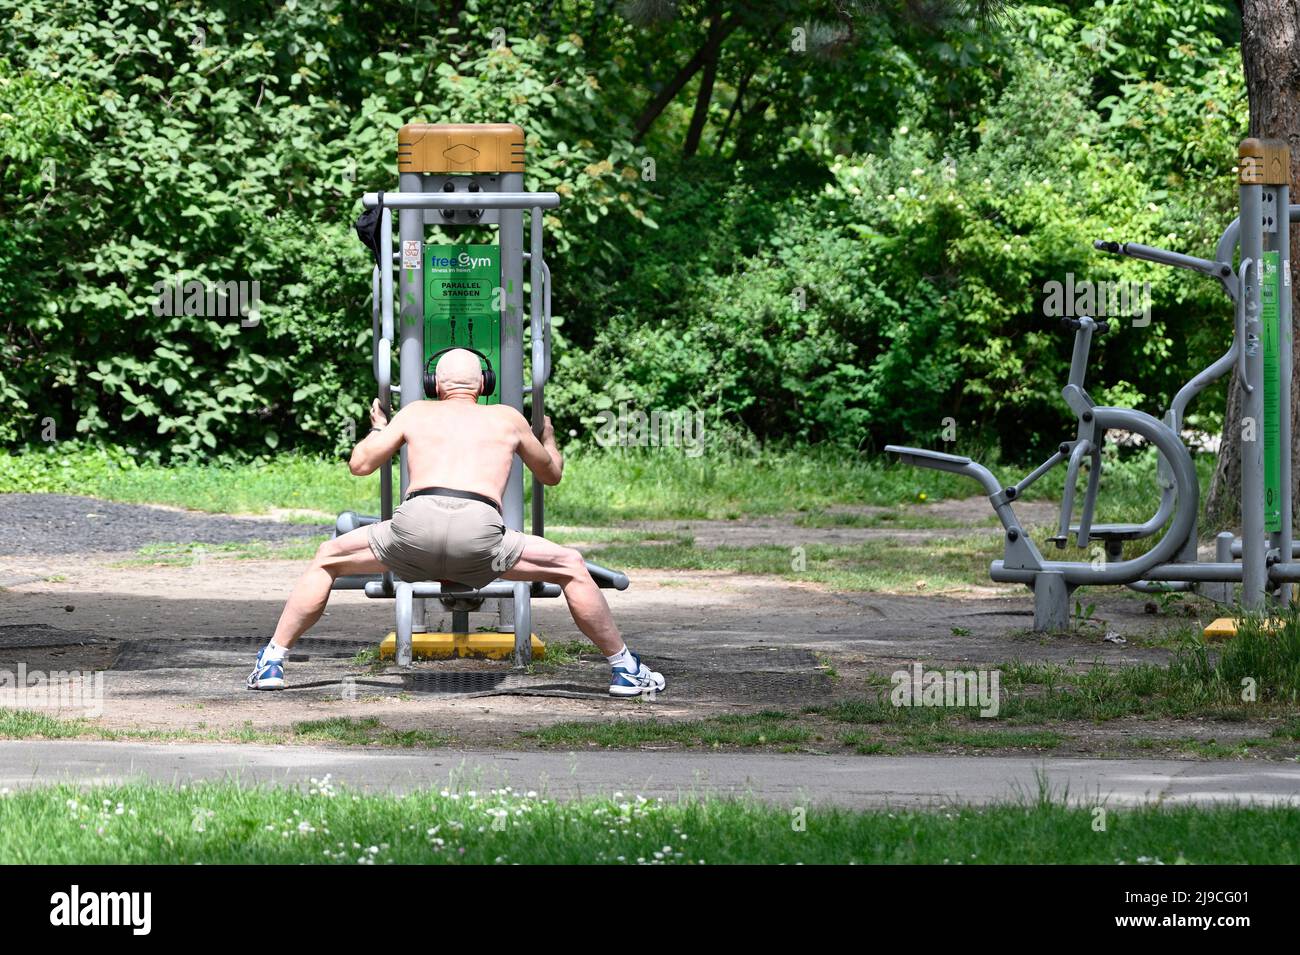 Vienna, Austria. Man on fitness equipment in the park Stock Photo